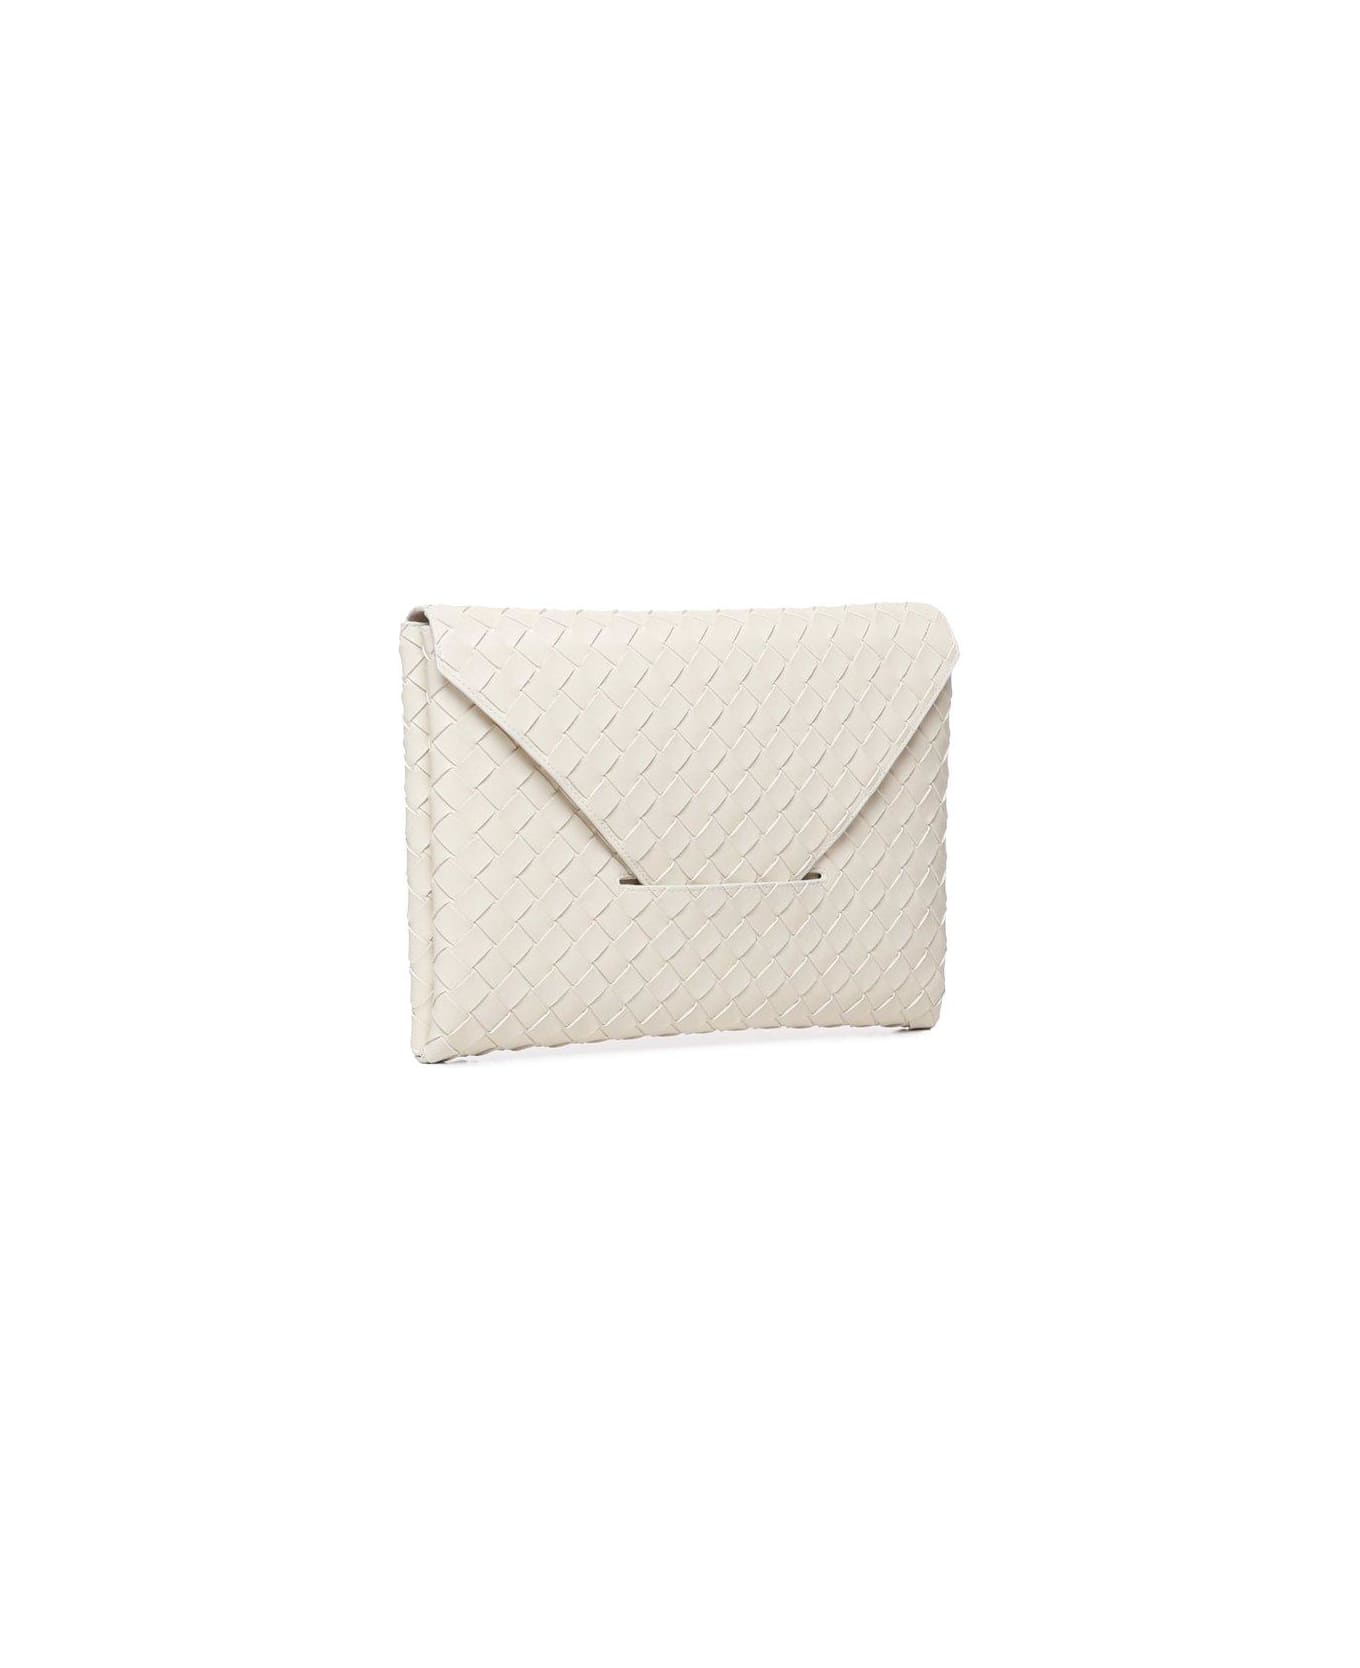 Bottega Veneta Origami Large Clutch Bag - White クラッチバッグ